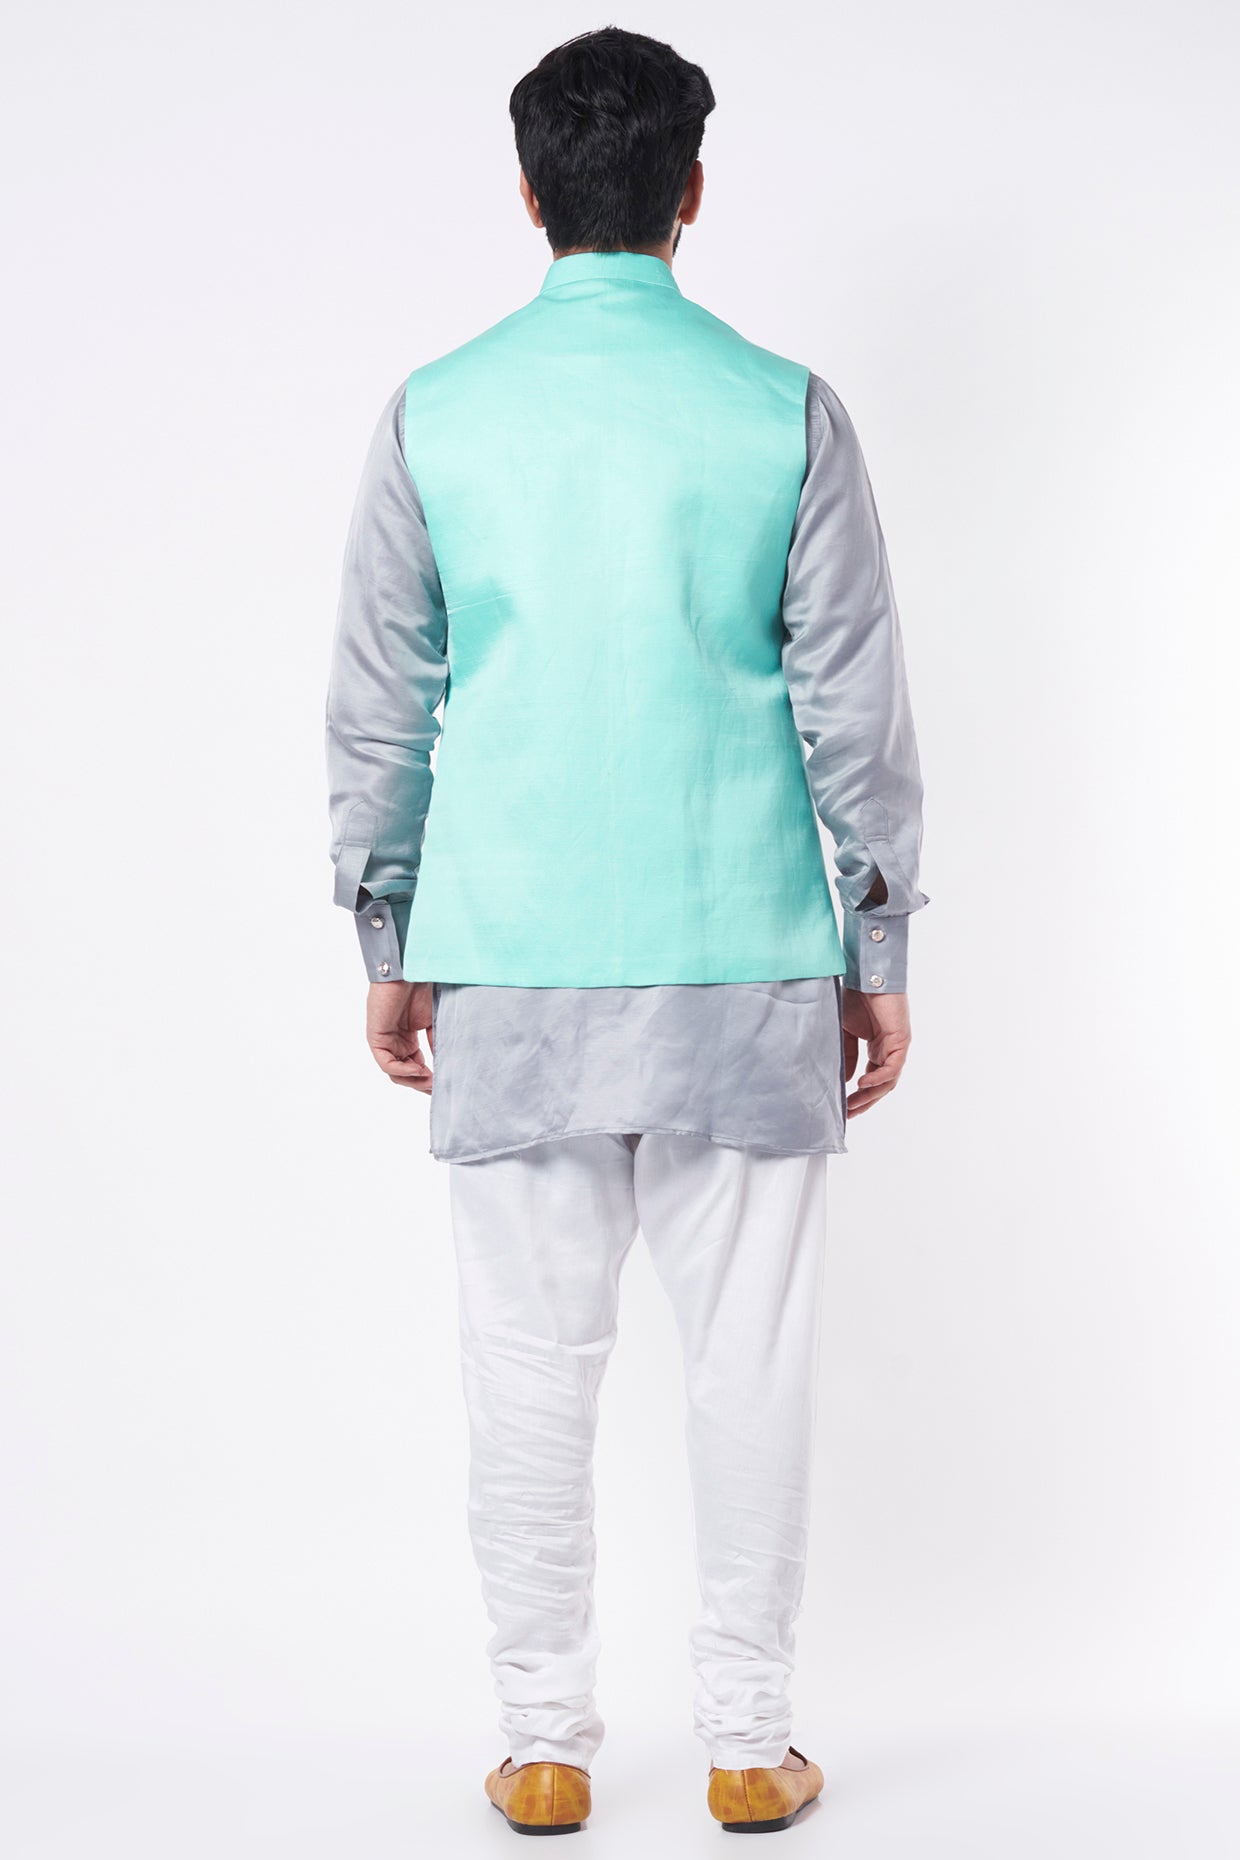 Colour Block Bundi Jacket with Kurta Set - Spring Break